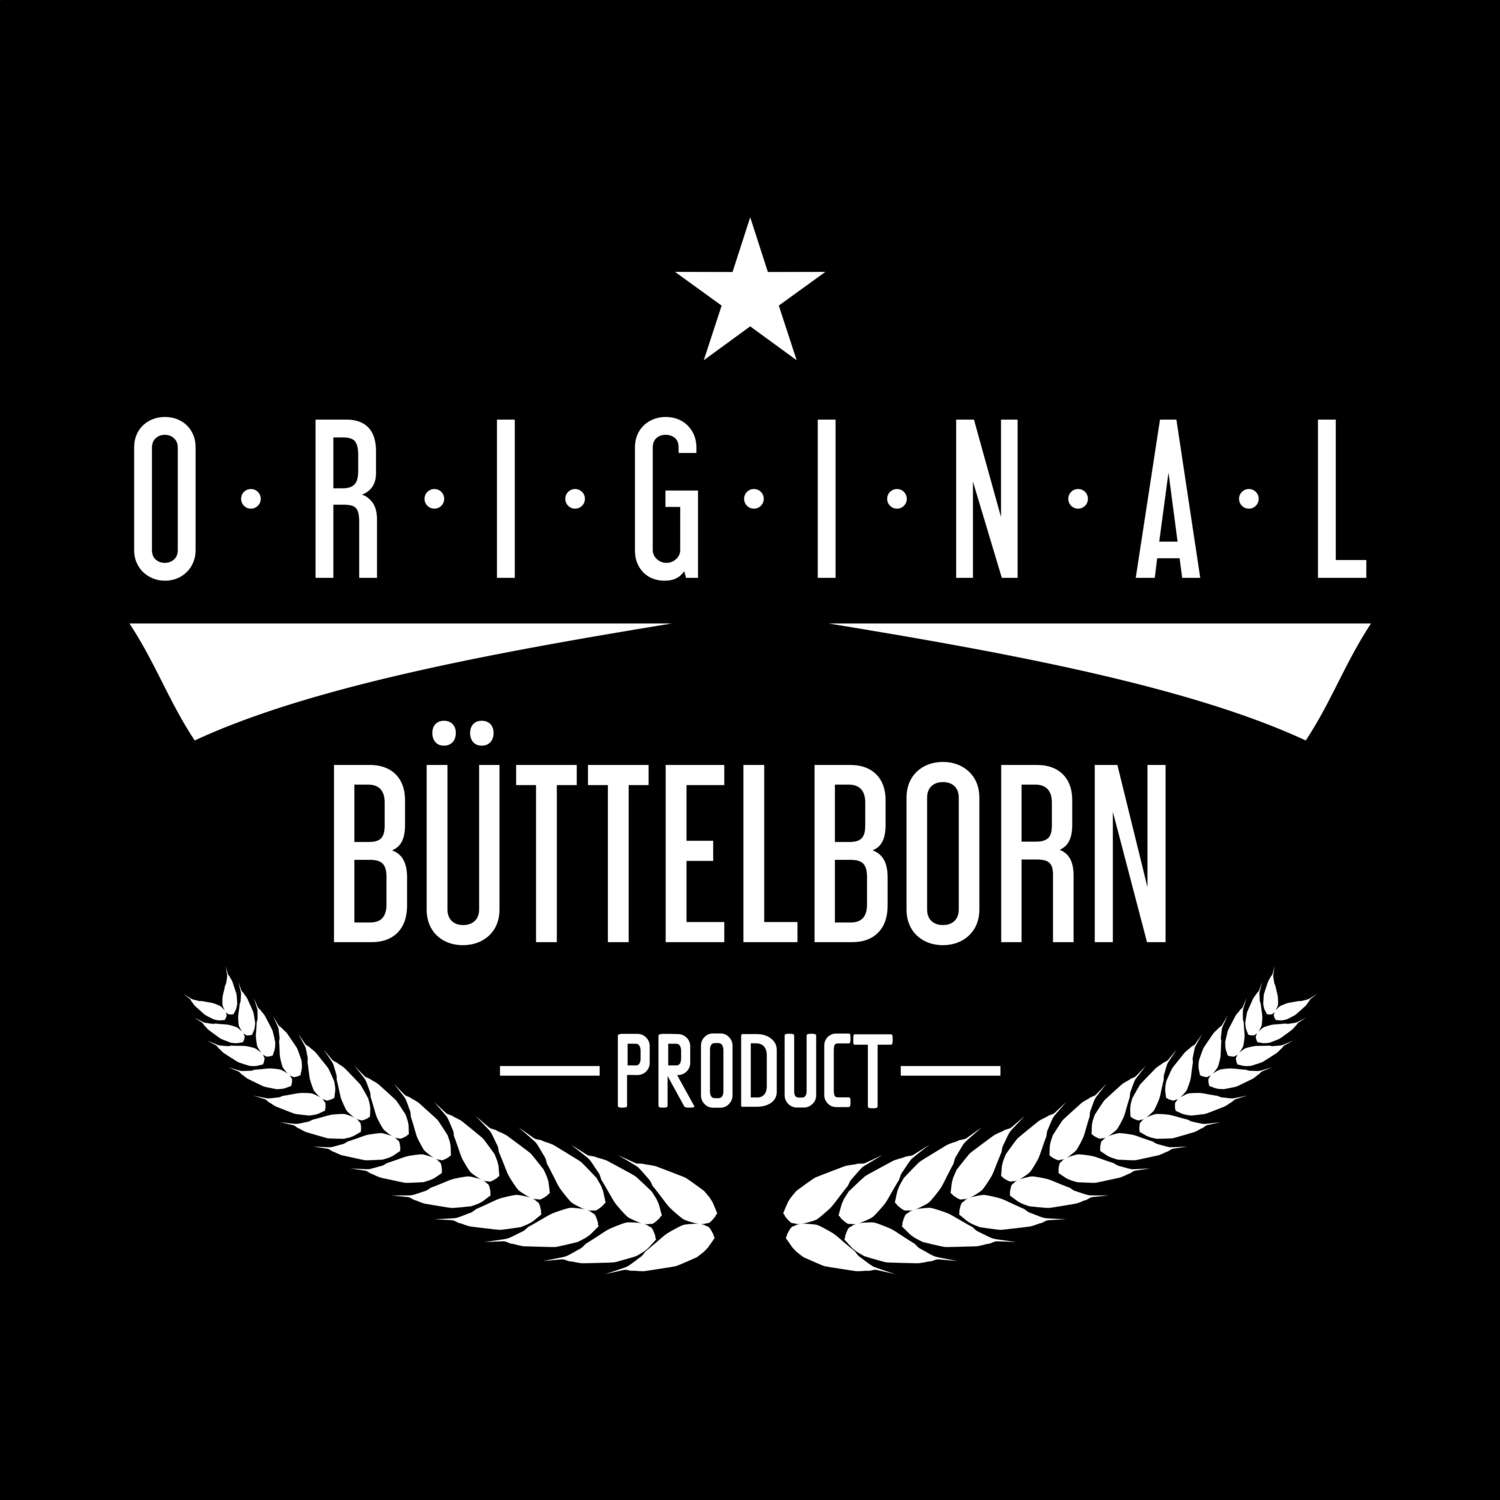 Büttelborn T-Shirt »Original Product«